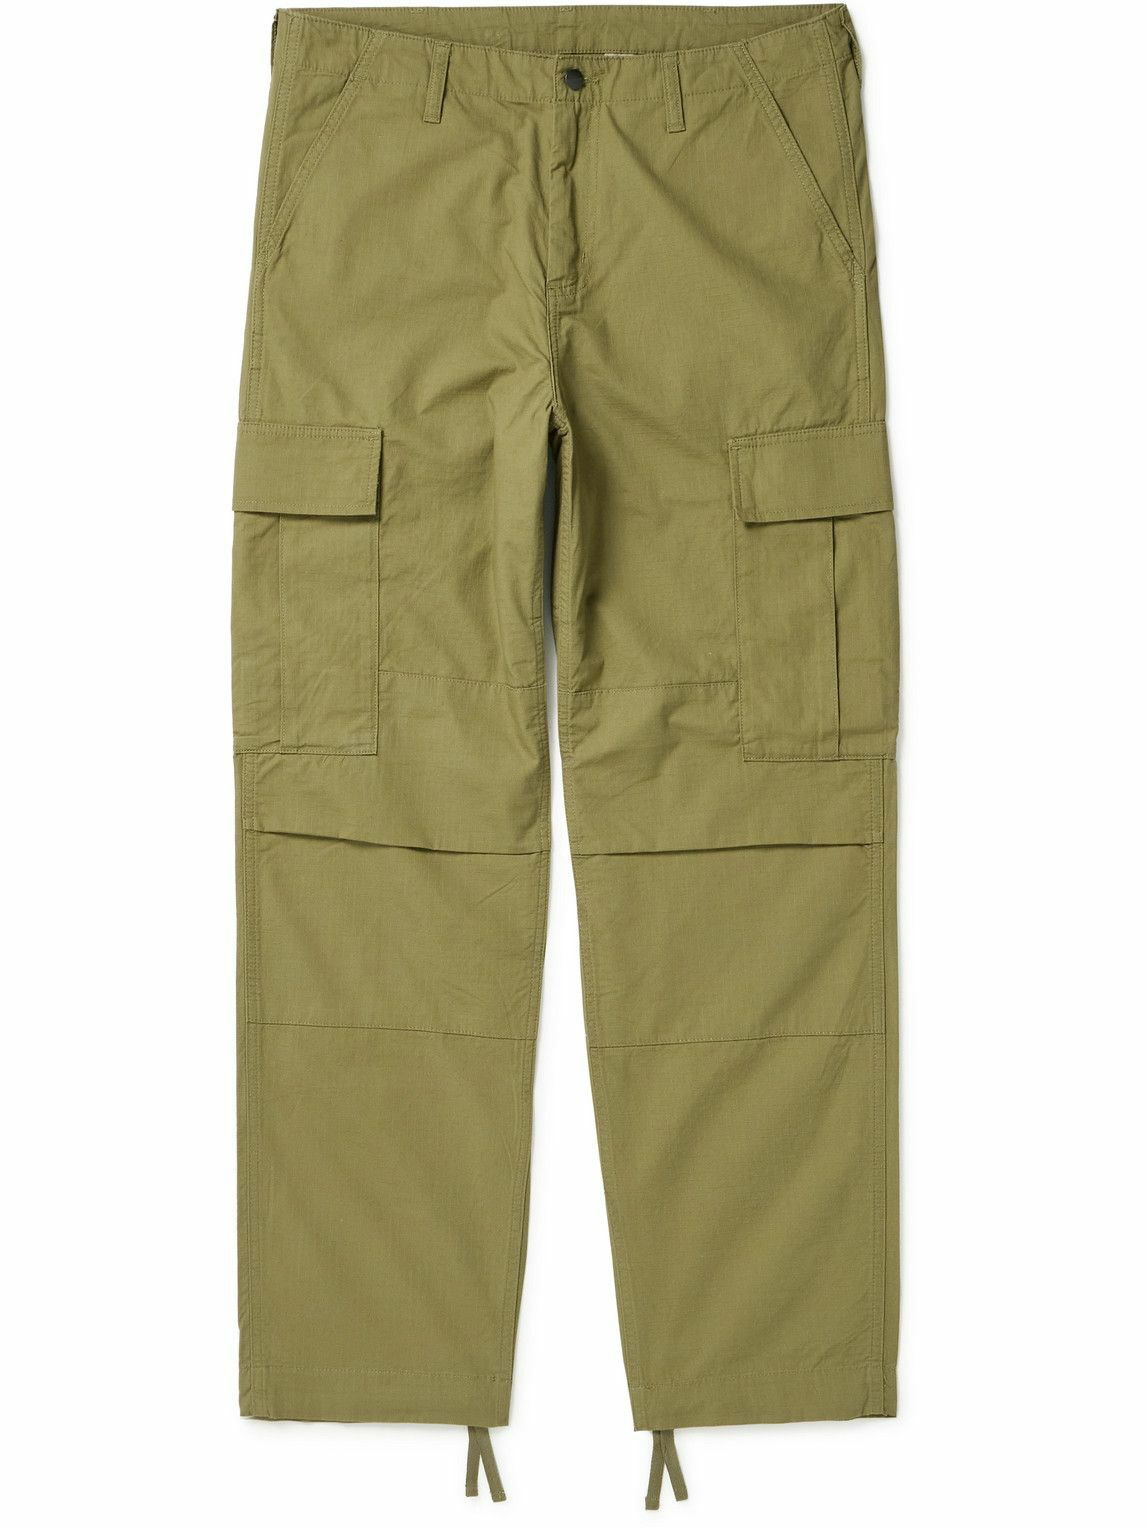 Carhartt Pants: WB051 VEM Women's Green Cotton Twill Cargo Pants